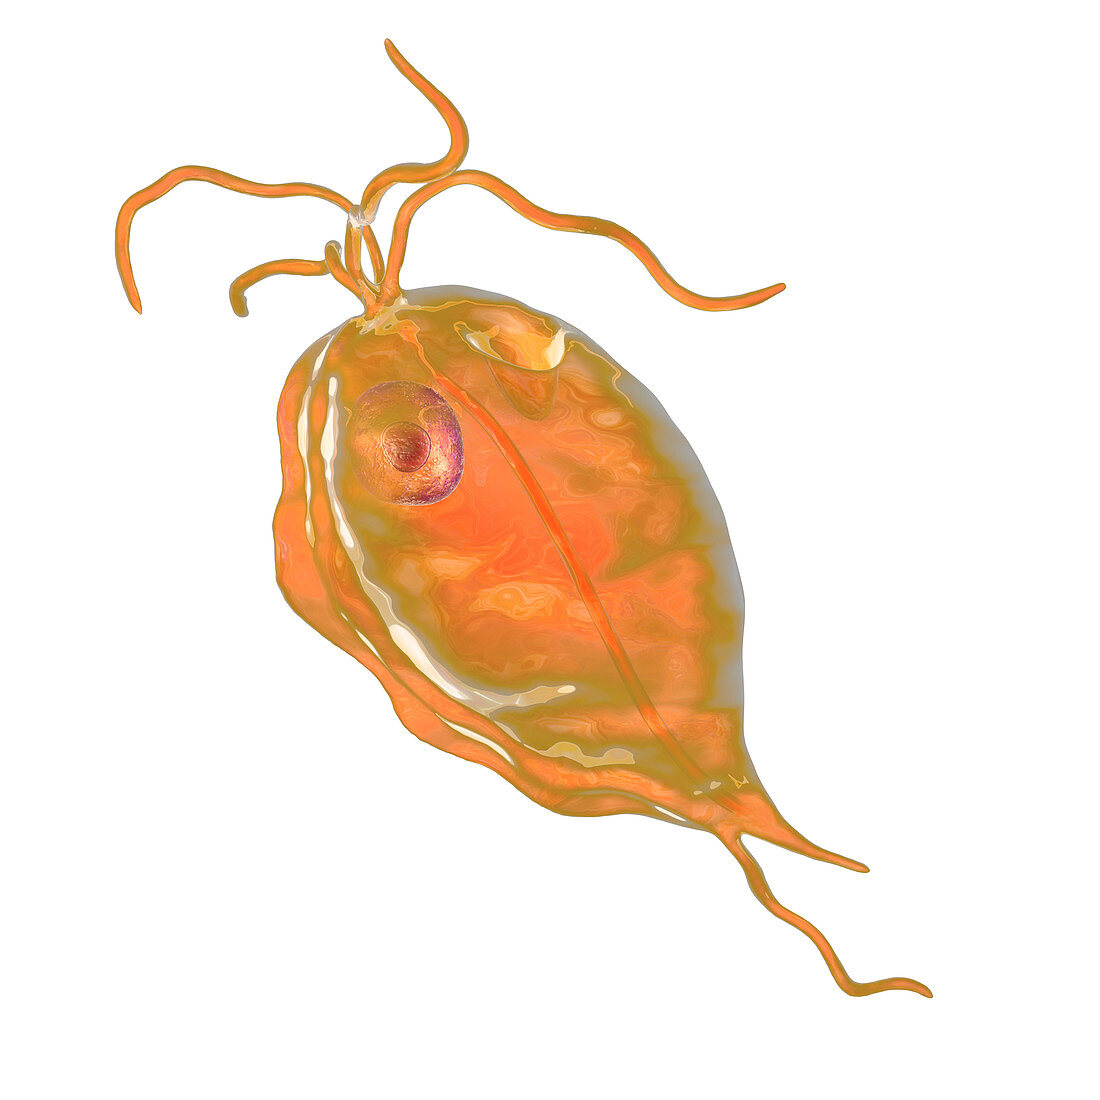 Pentatrichomonas intestinal parasite, illustration